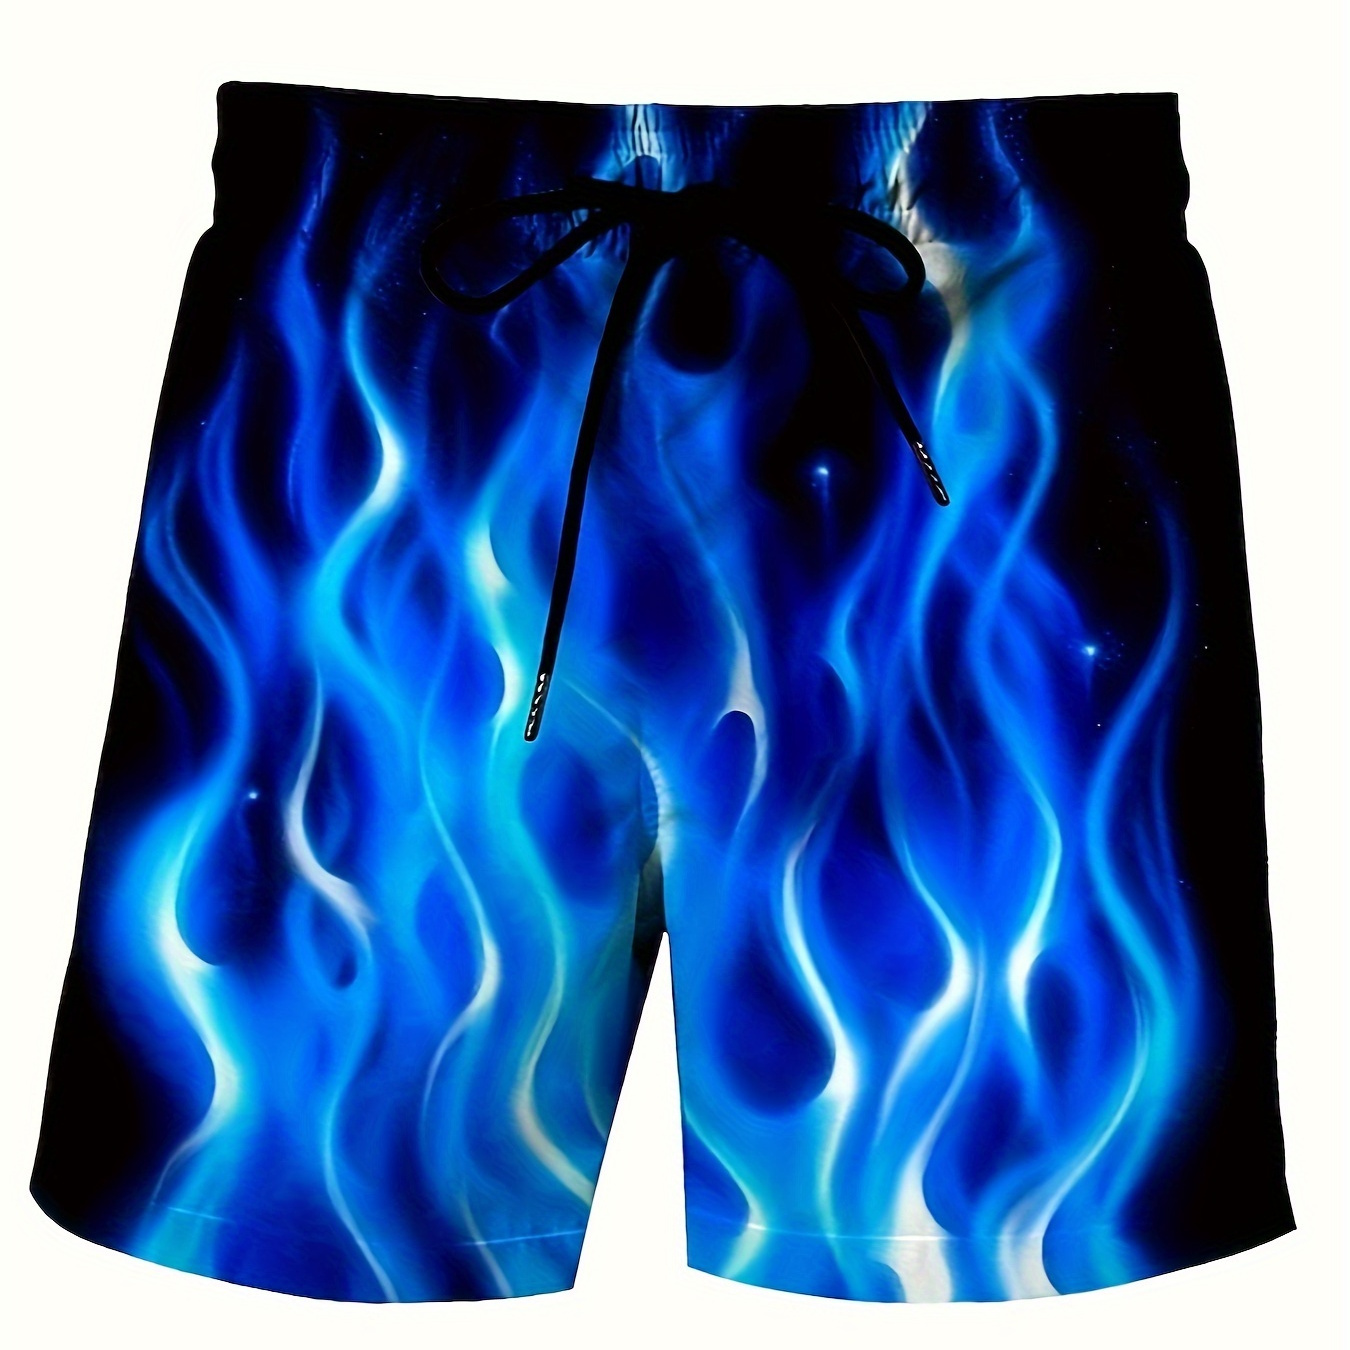 

Men's Casual Flame Print Active Shorts, Drawstring Beach Shorts For Summer Beach Resort